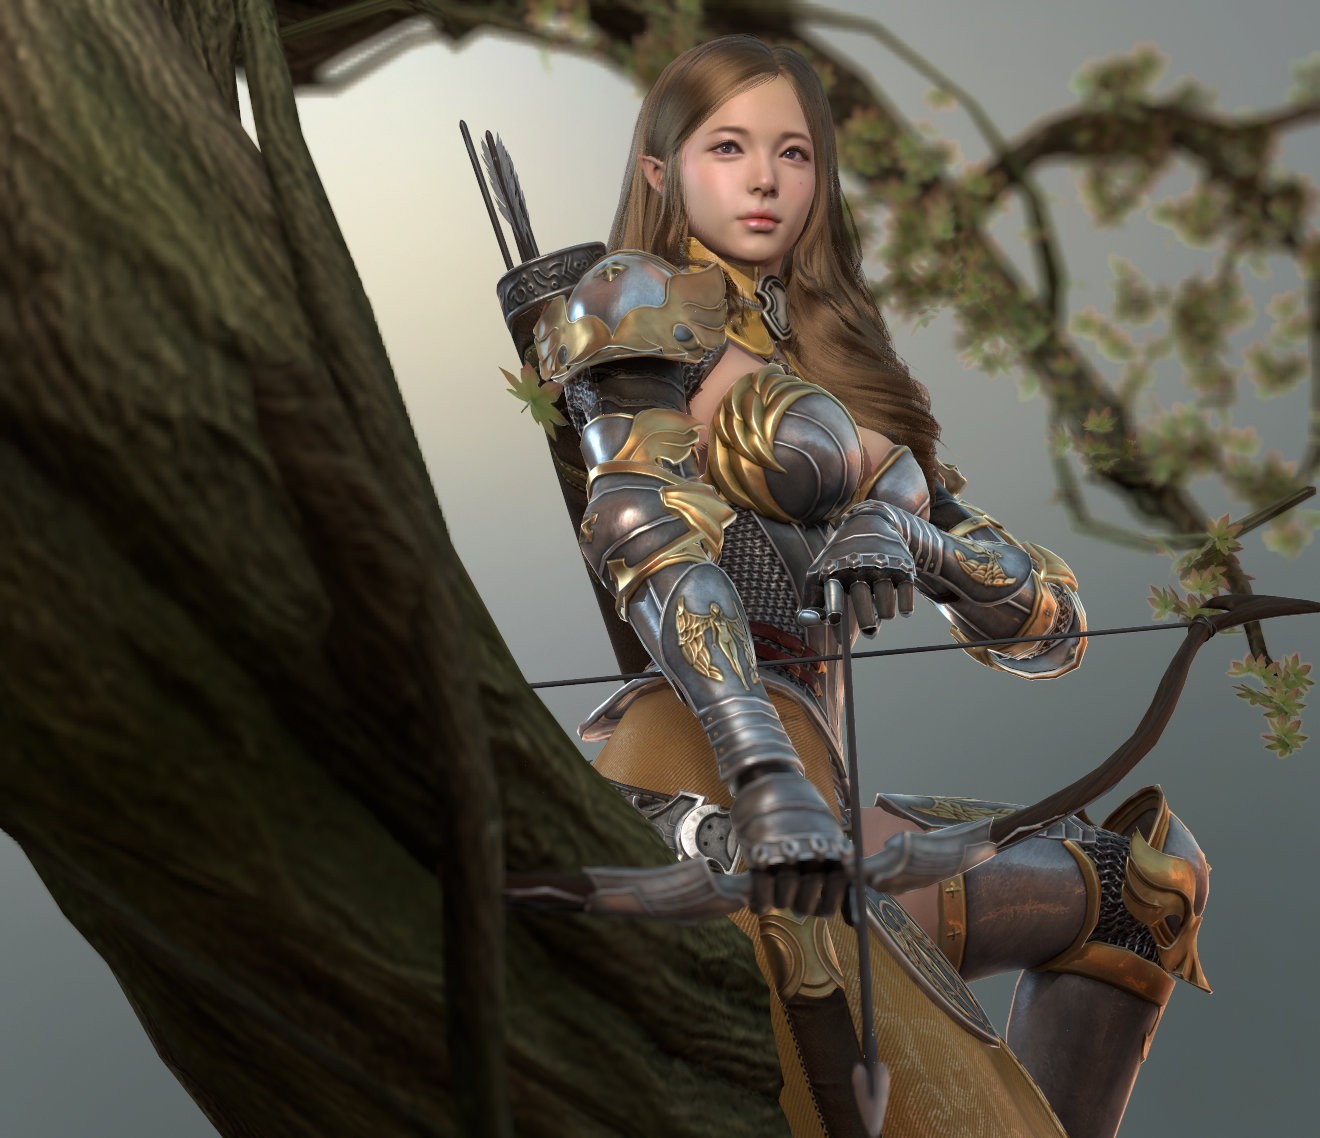 General 1320x1138 archer fantasy art fantasy girl Asian women digital art bow and arrow bow arrows pointy ears brunette long hair CGI fantasy armor armor